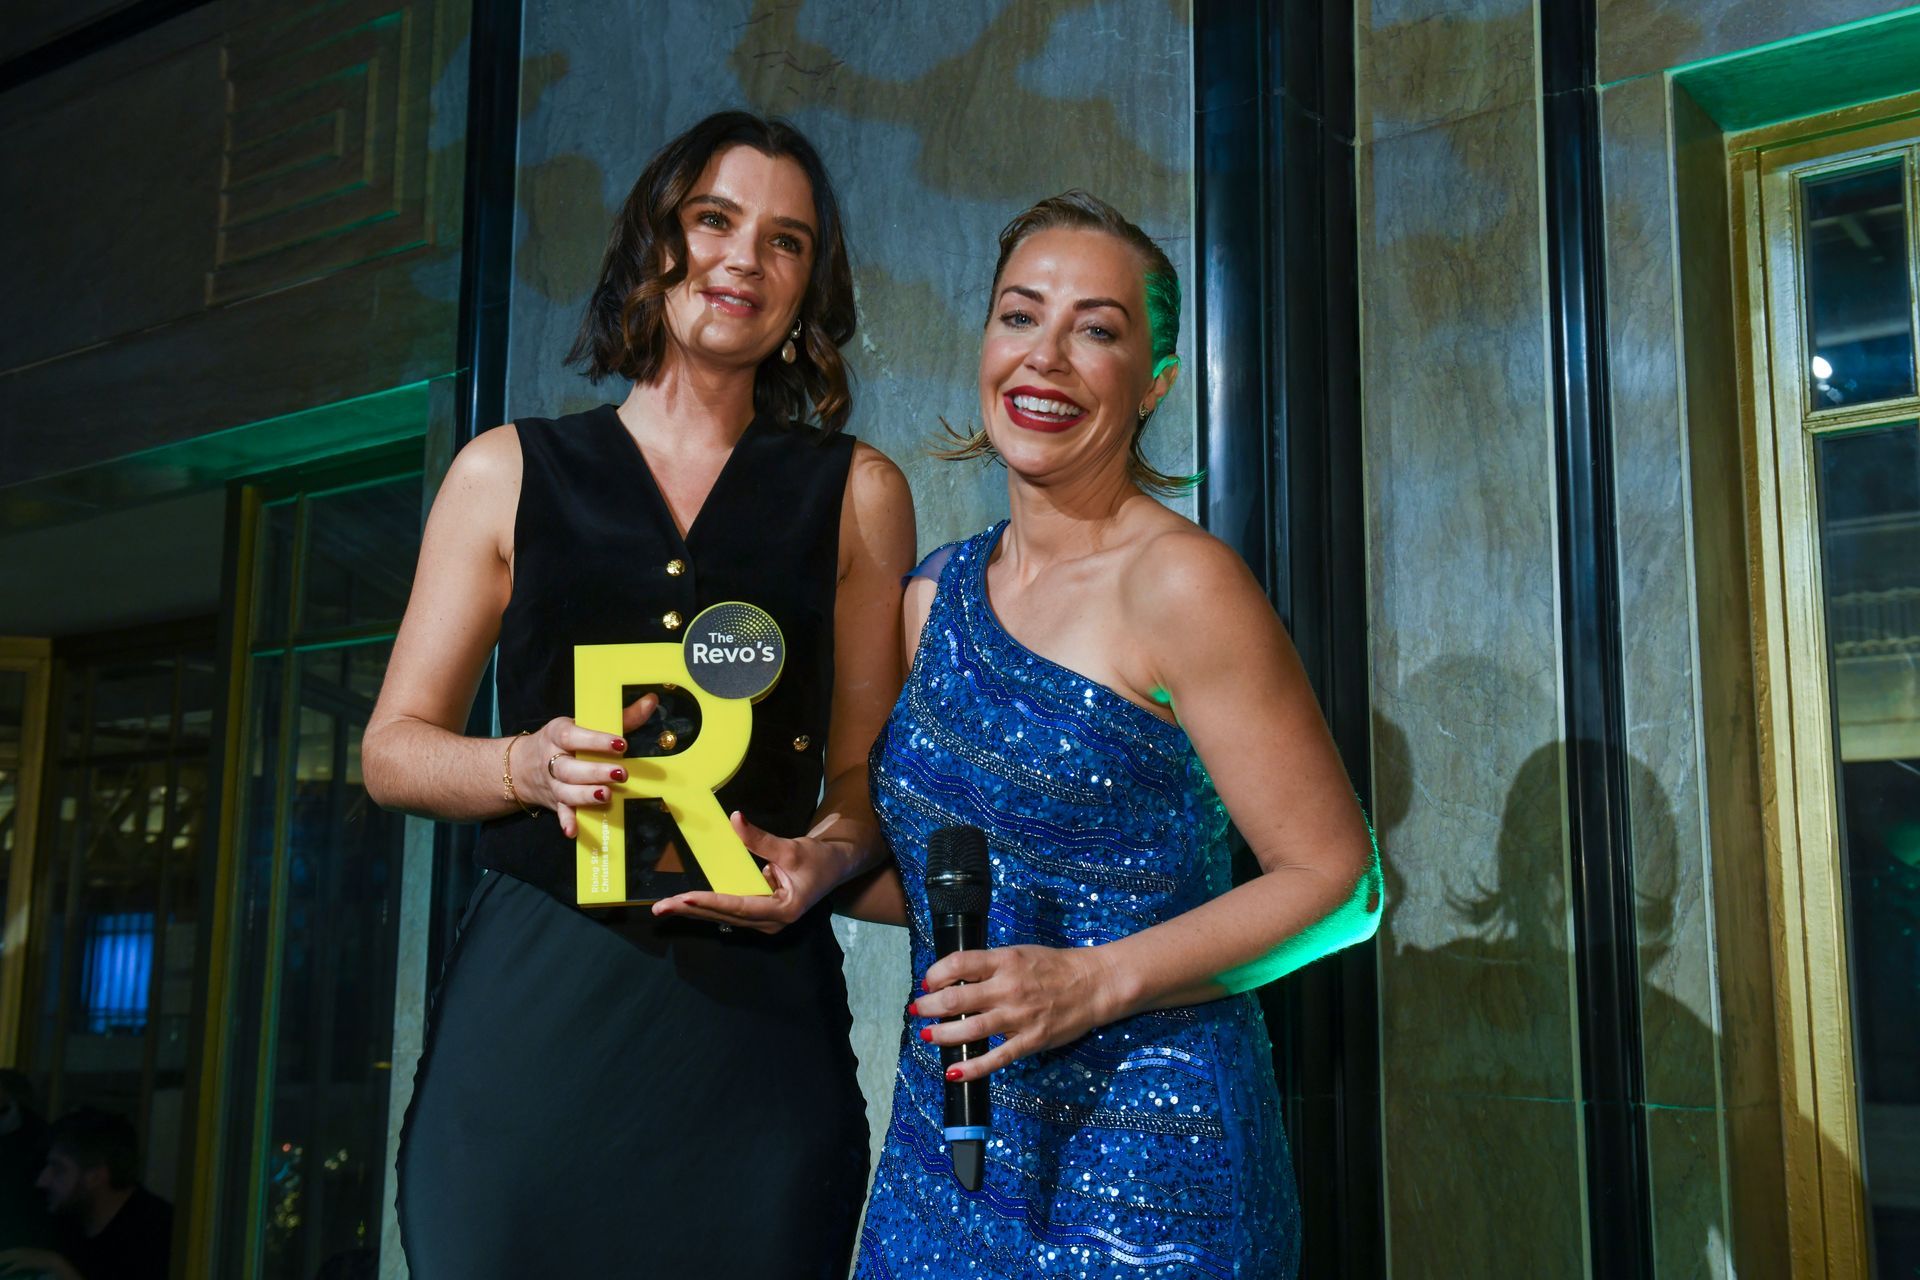 Christina Beggan wins Revo's Rising Star award